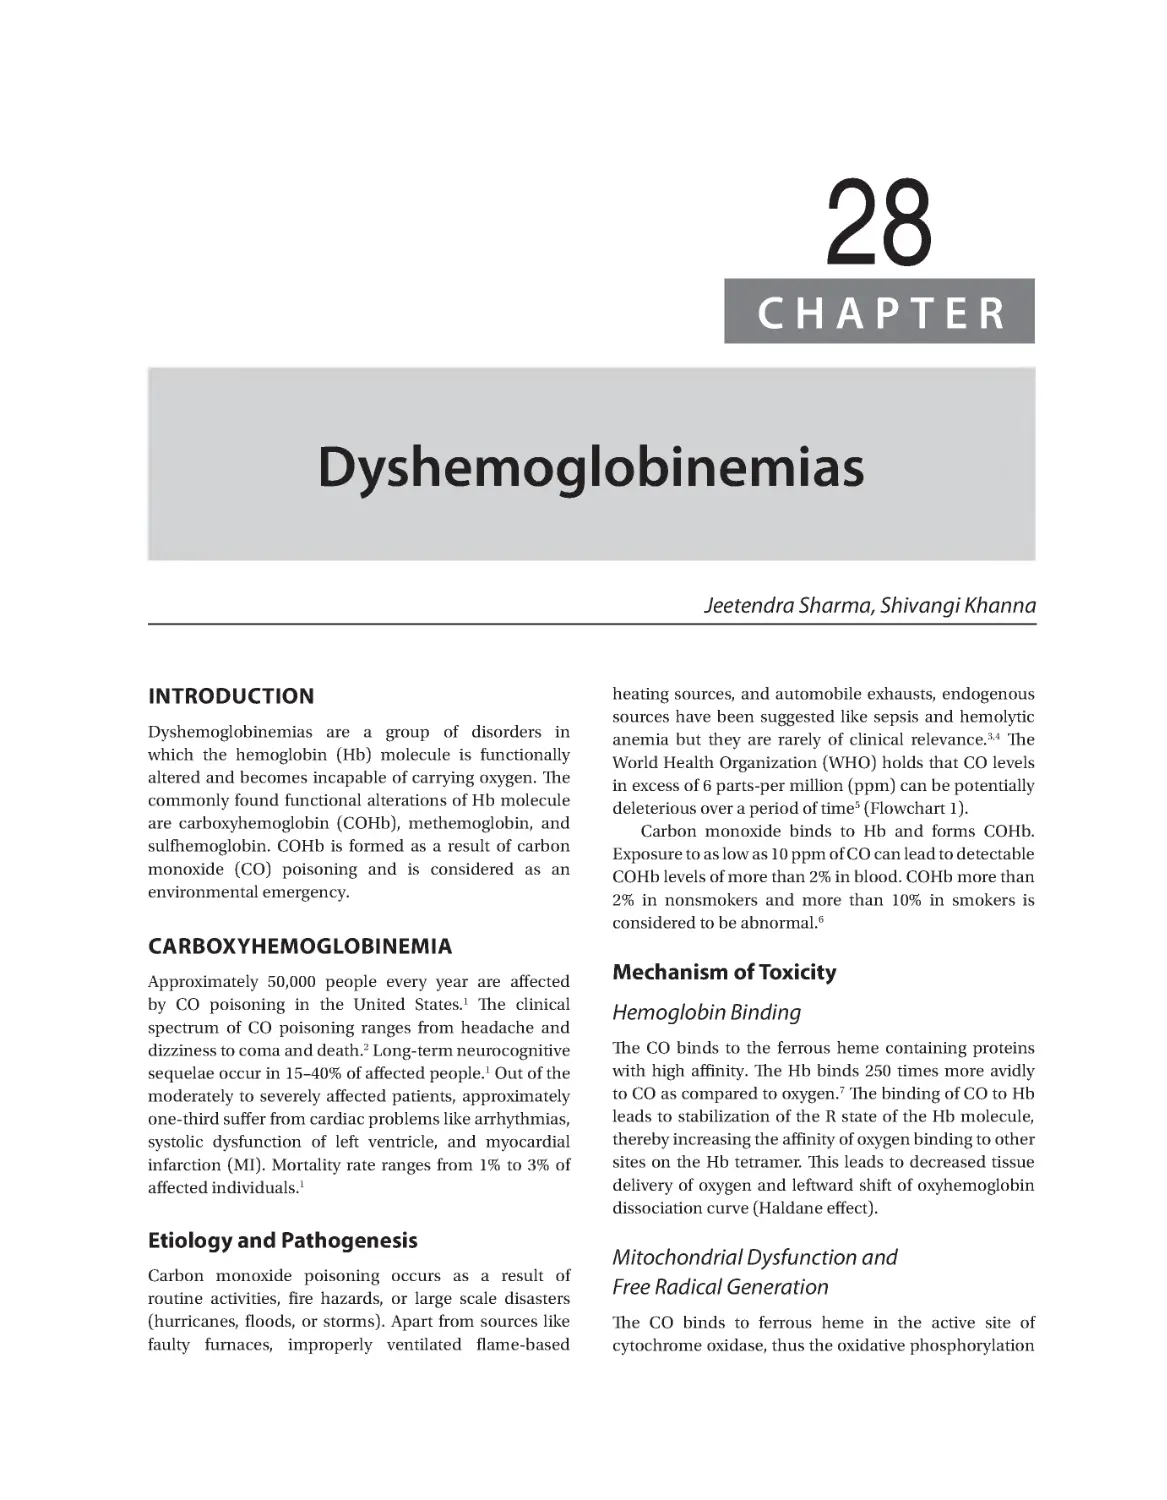 Chapter 28: Dyshemoglobinemias